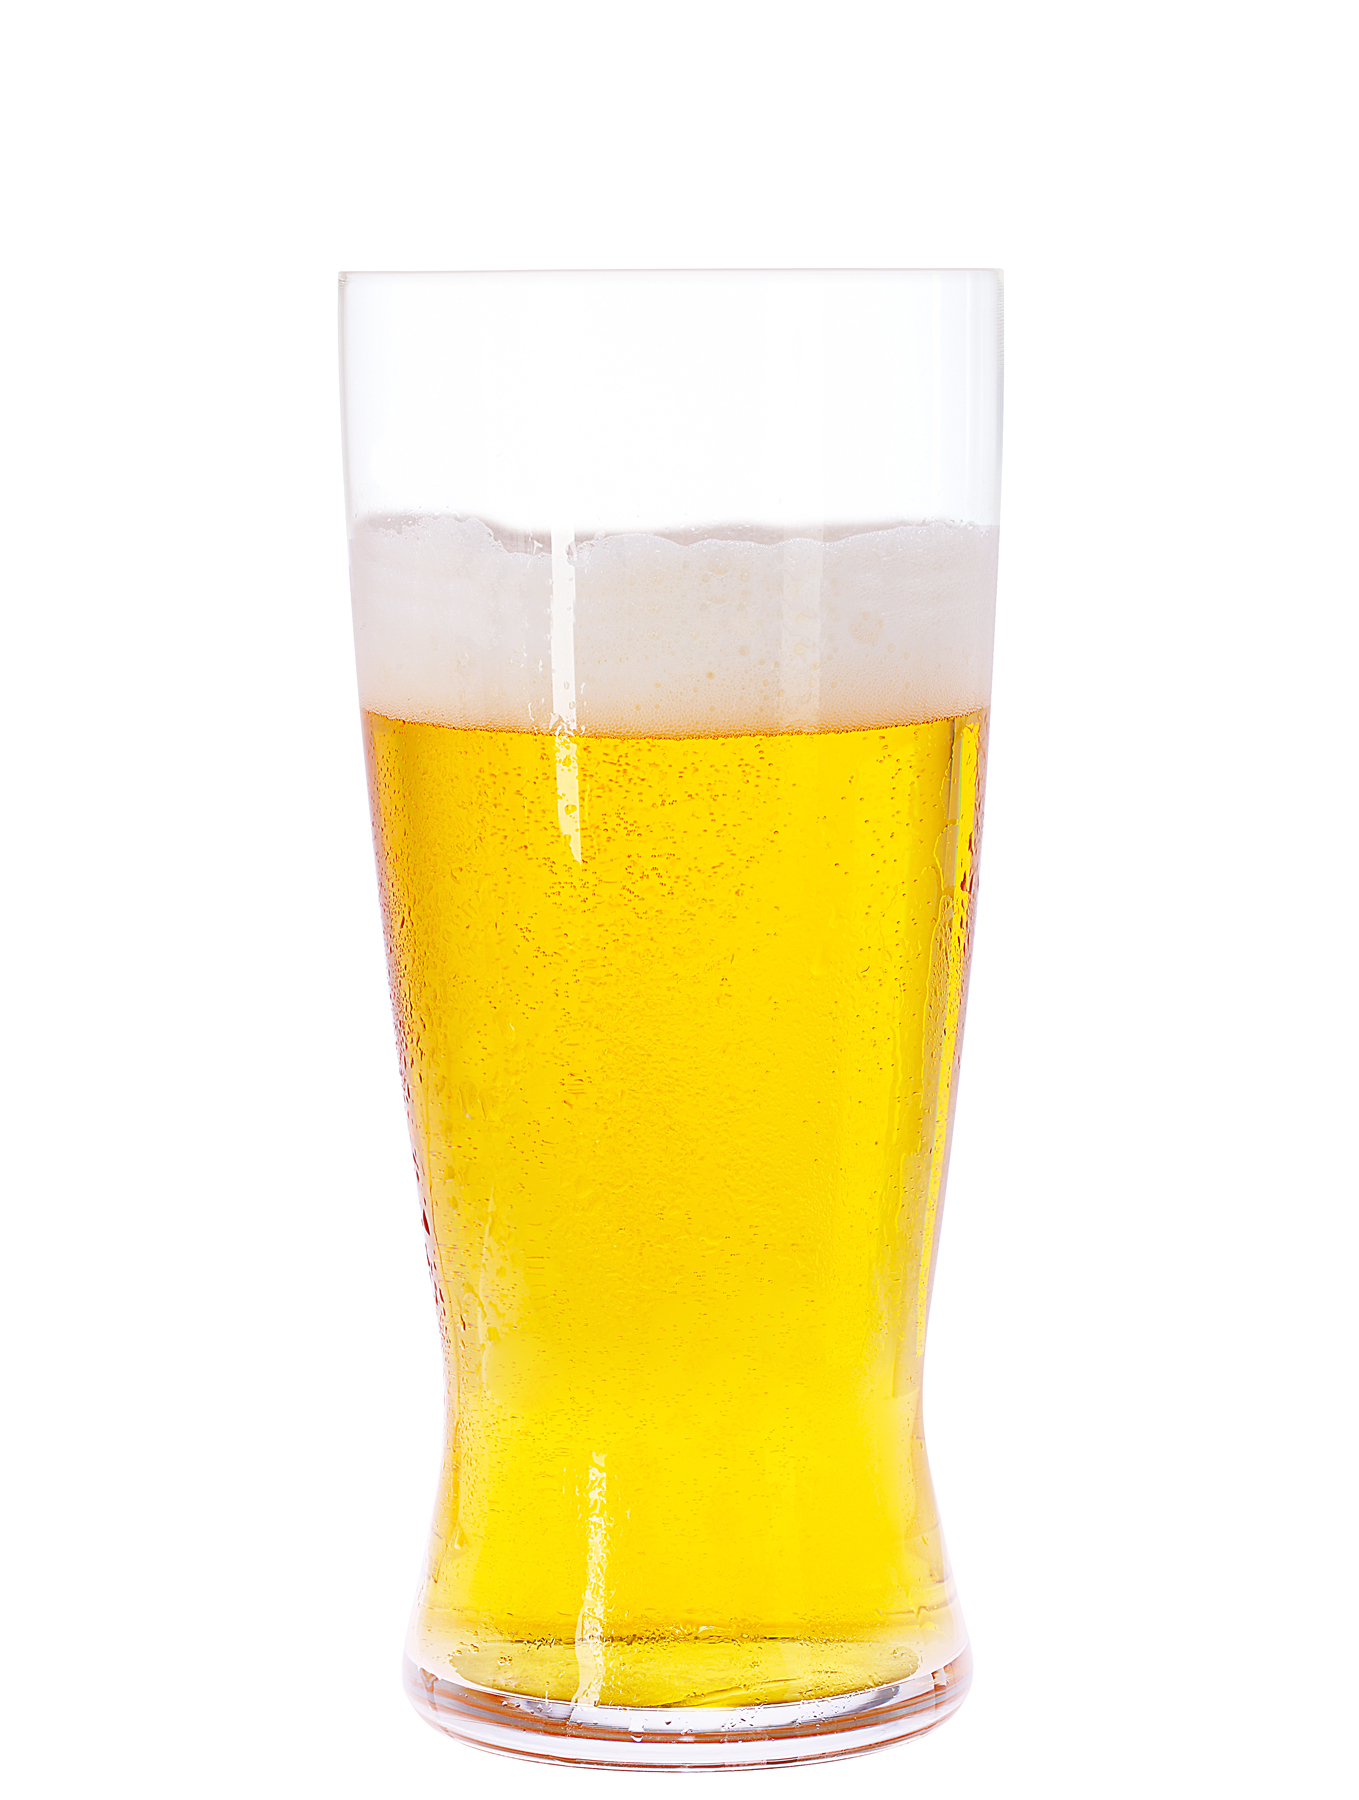 Lagerbierglas Beer Classics, Spiegelau - 630ml (12 Stk.)